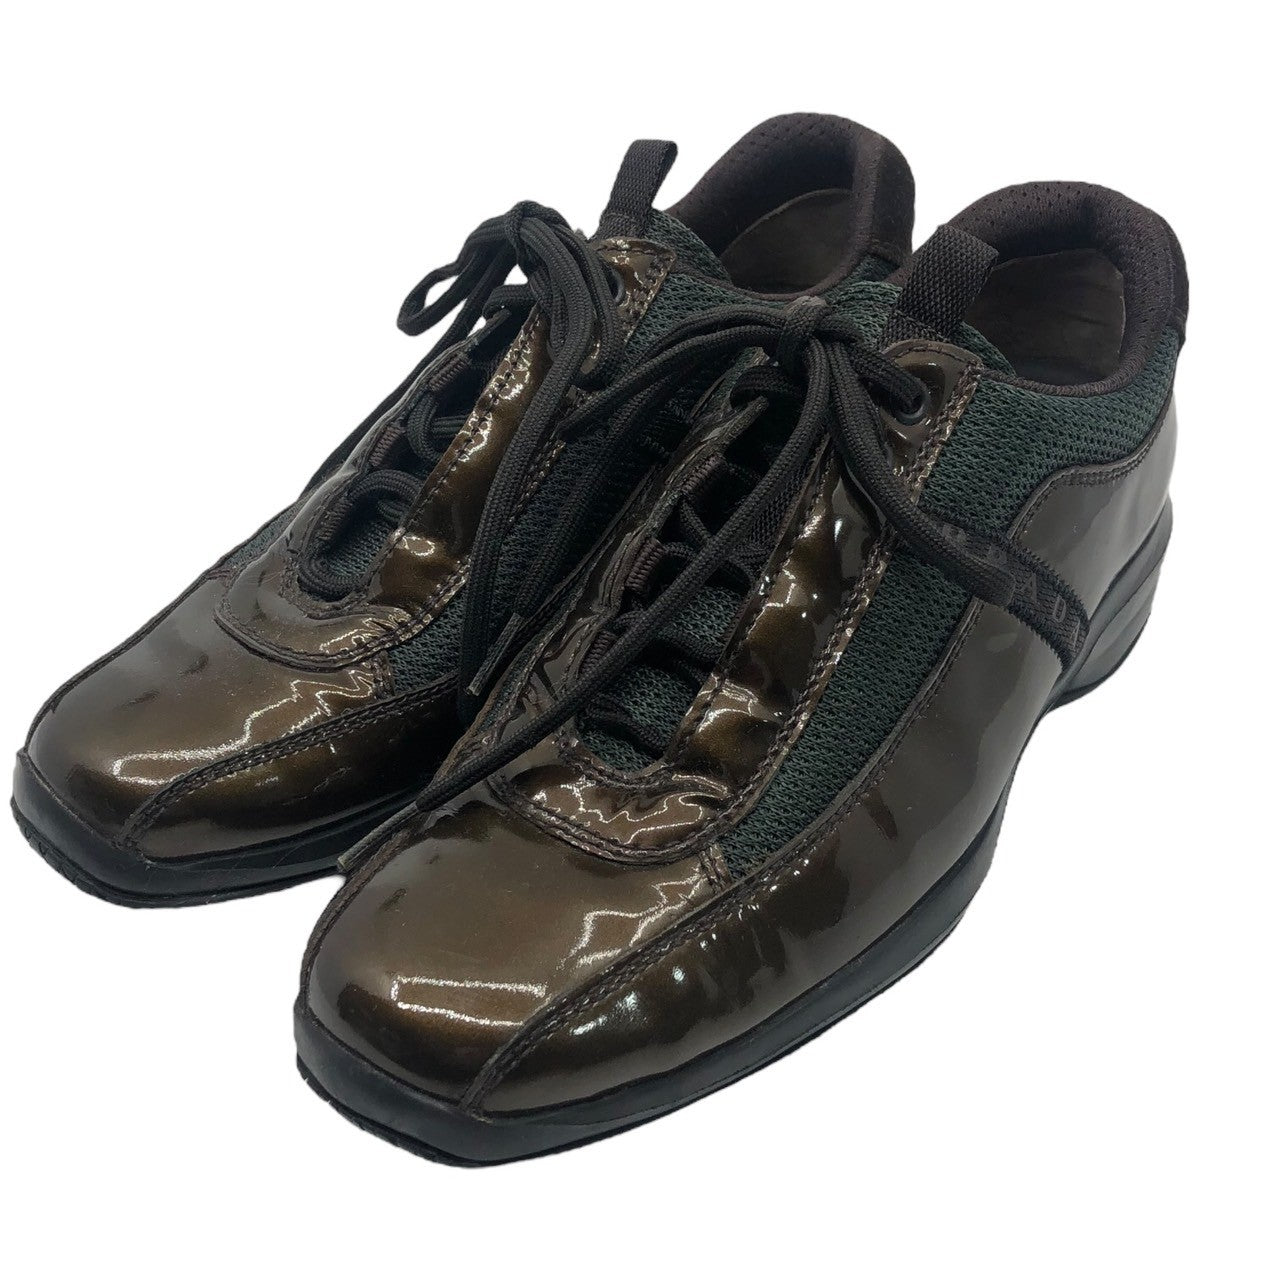 PRADA SPORT(プラダスポーツ) 00's enamel tech shoes エナメル テック シューズ ローカット スニーカー 3261 37(23.5cm程度) ブラウン×グレー